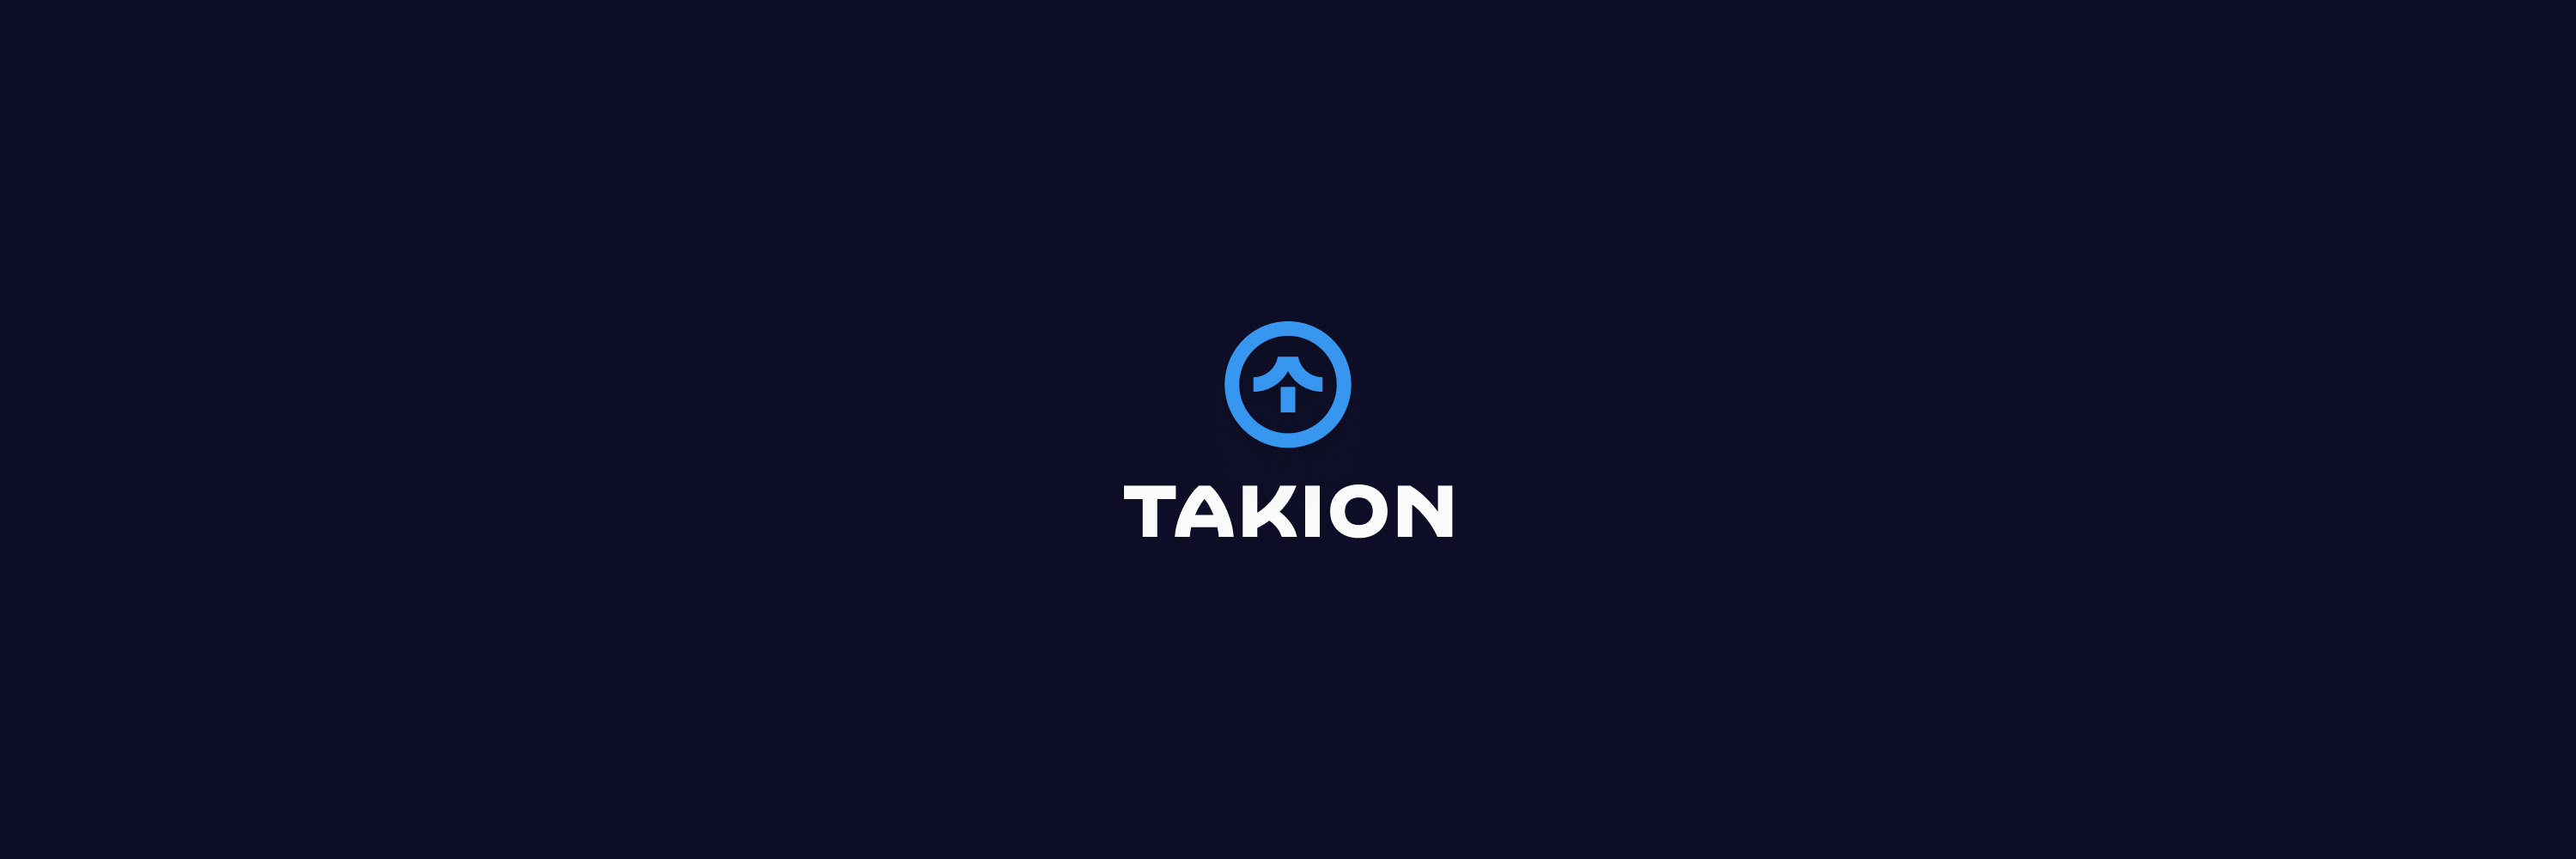 Takion Banner